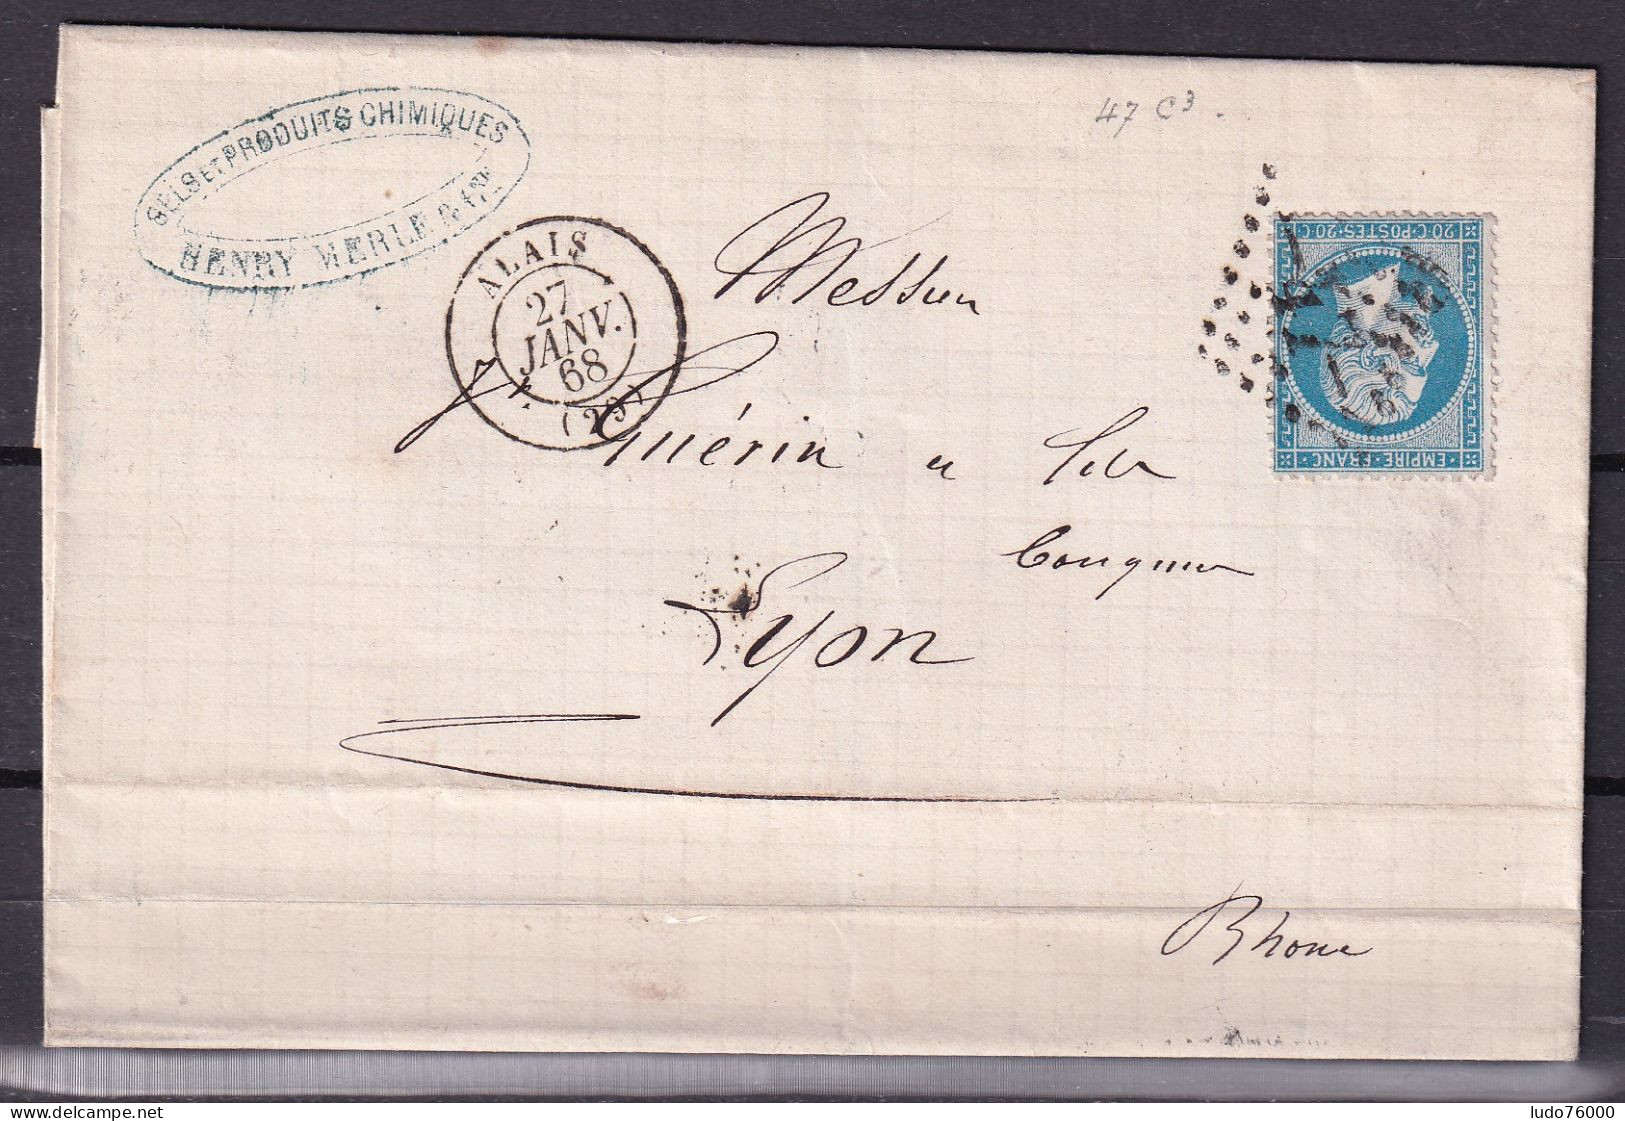 D 807 / NAPOLEON N° 22 SUR LETTRE - 1862 Napoleon III